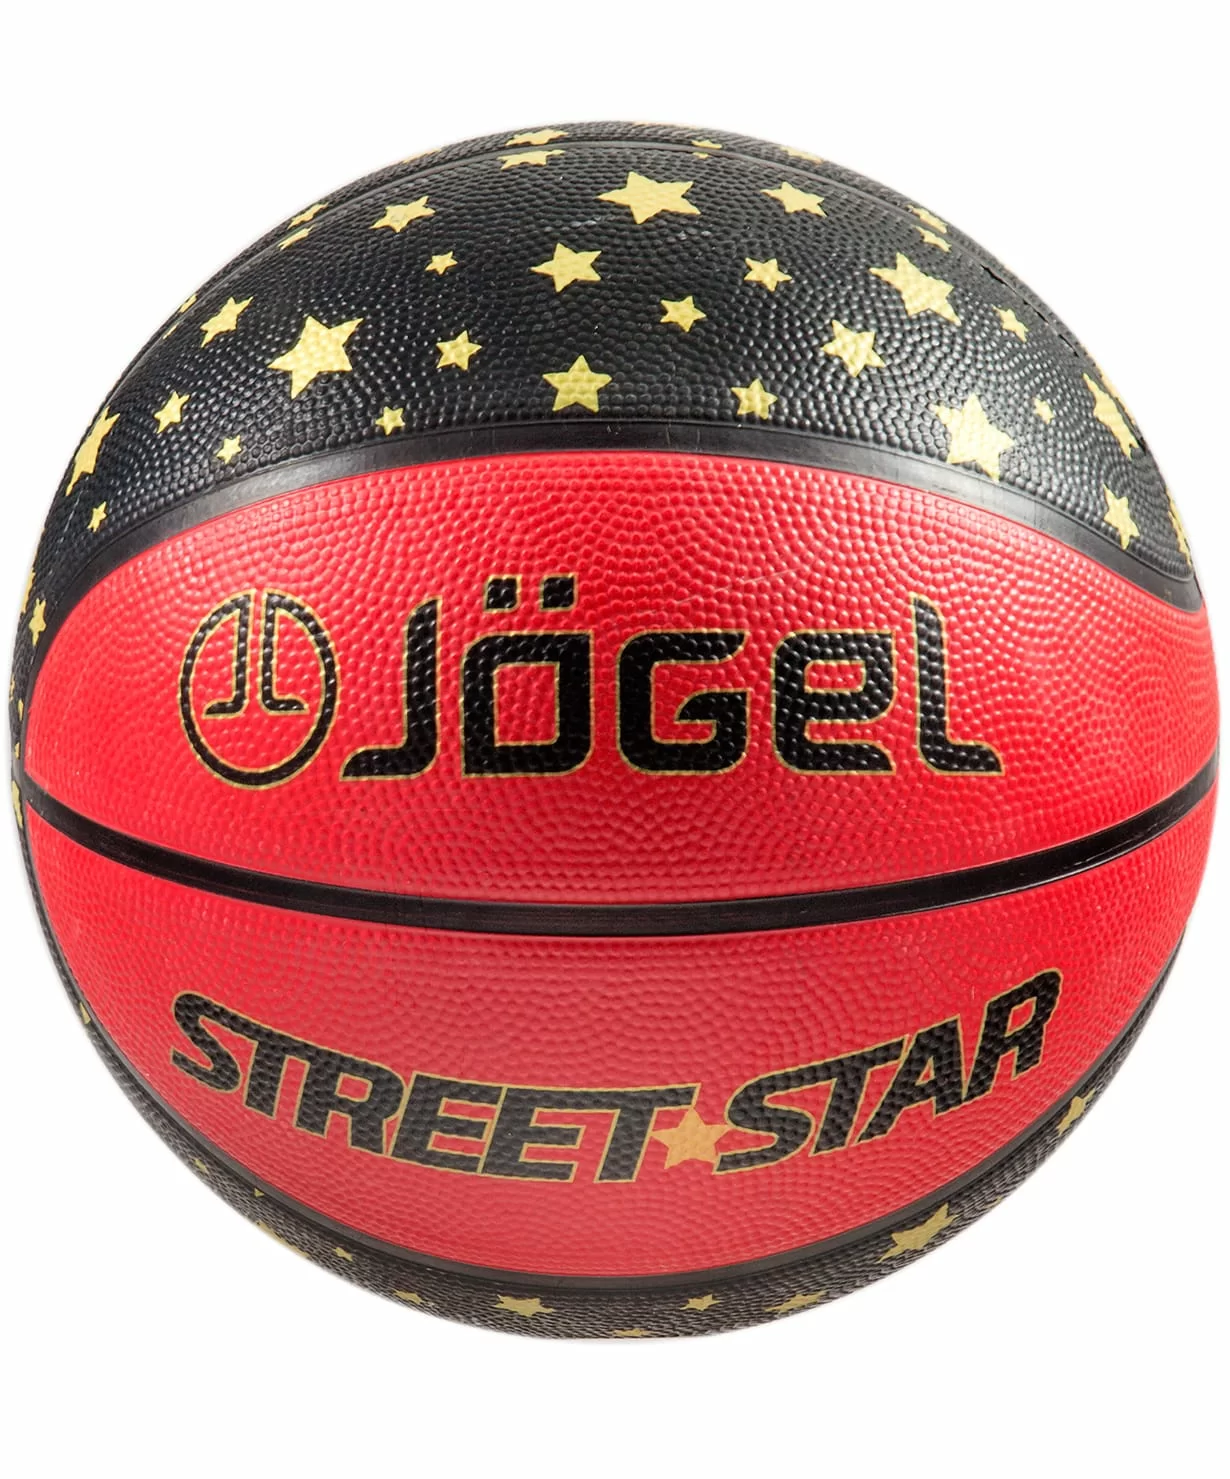 Фото Мяч баскетбольный Jogel Street Star №7 УТ-00016929 со склада магазина СпортСЕ